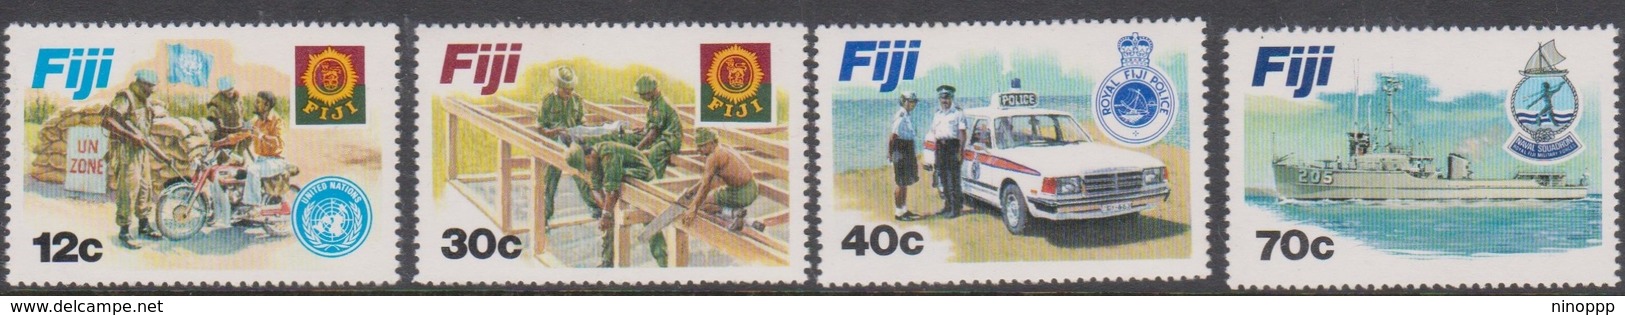 Fiji SG 632-635 1982 Disciplined Forces, Mint Never Hinged - Fiji (1970-...)